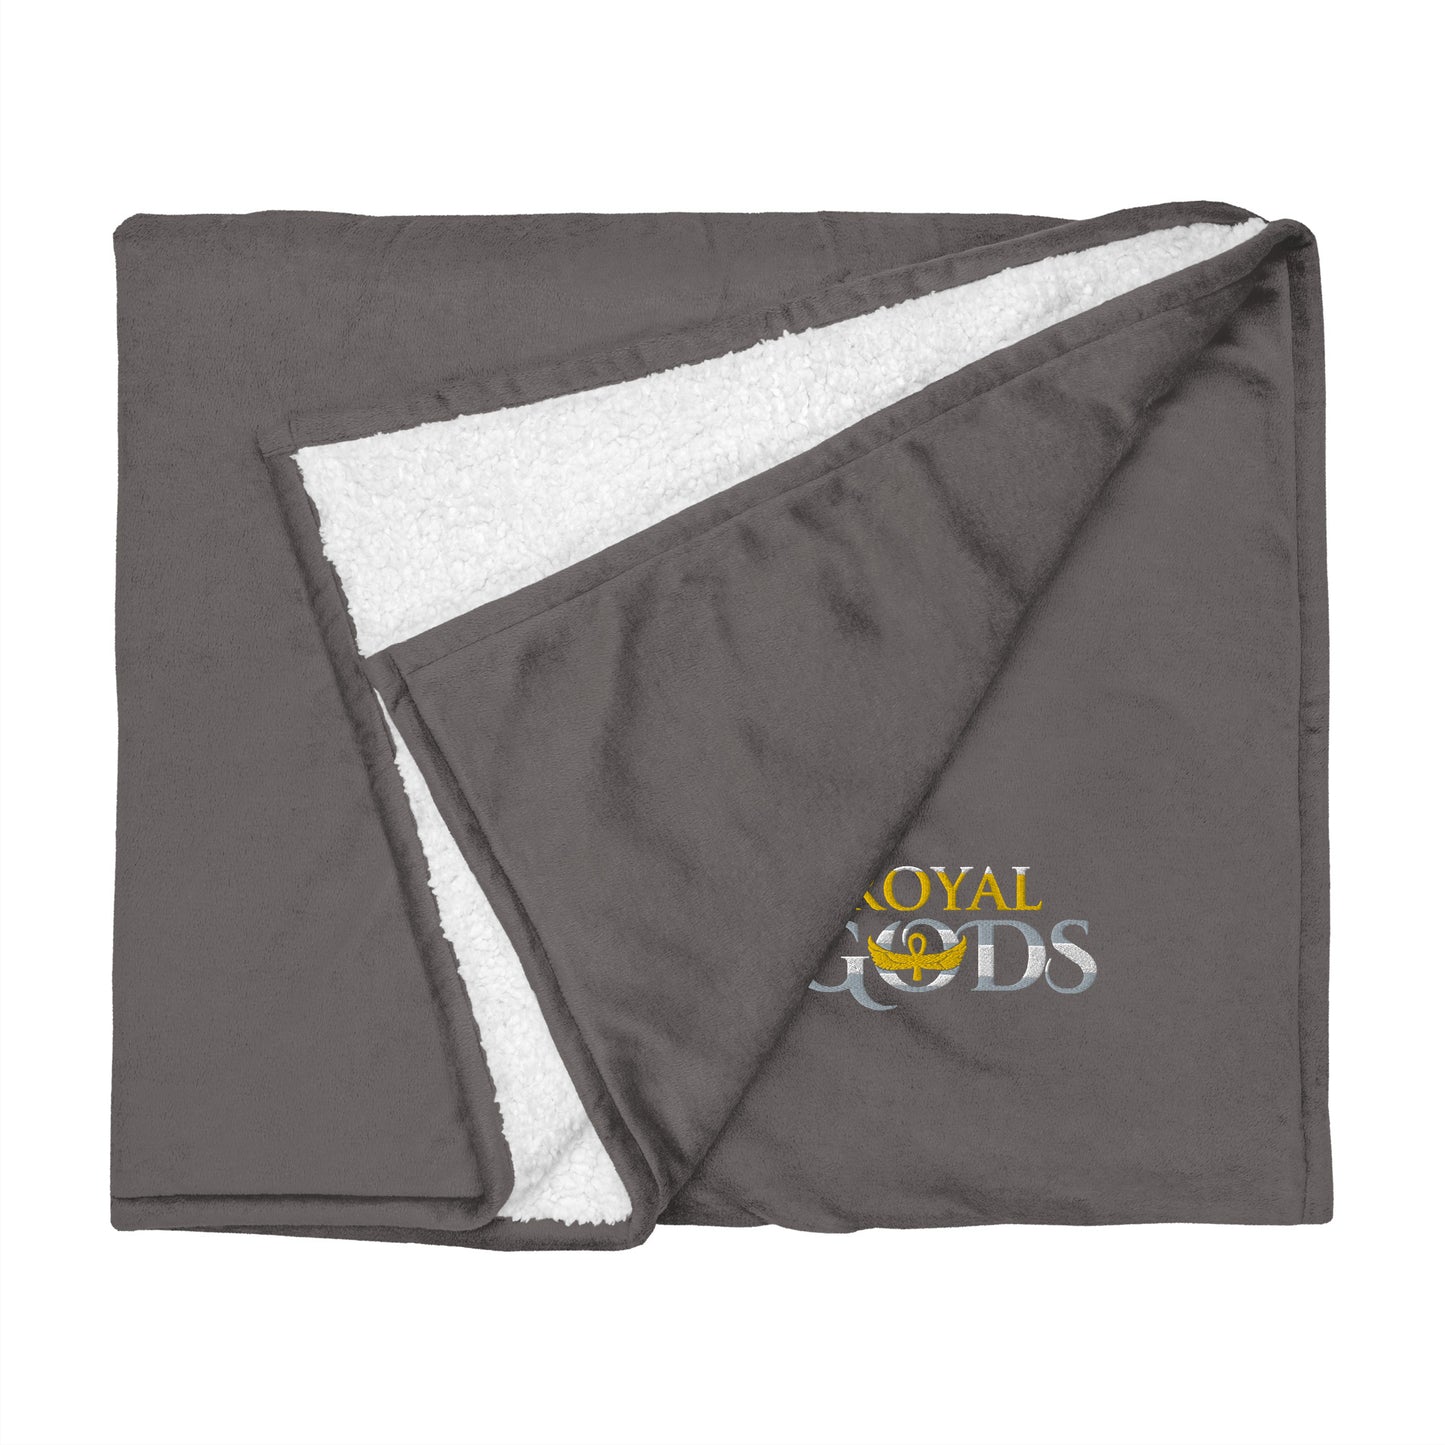 Royal Gods Premium Sherpa Blanket